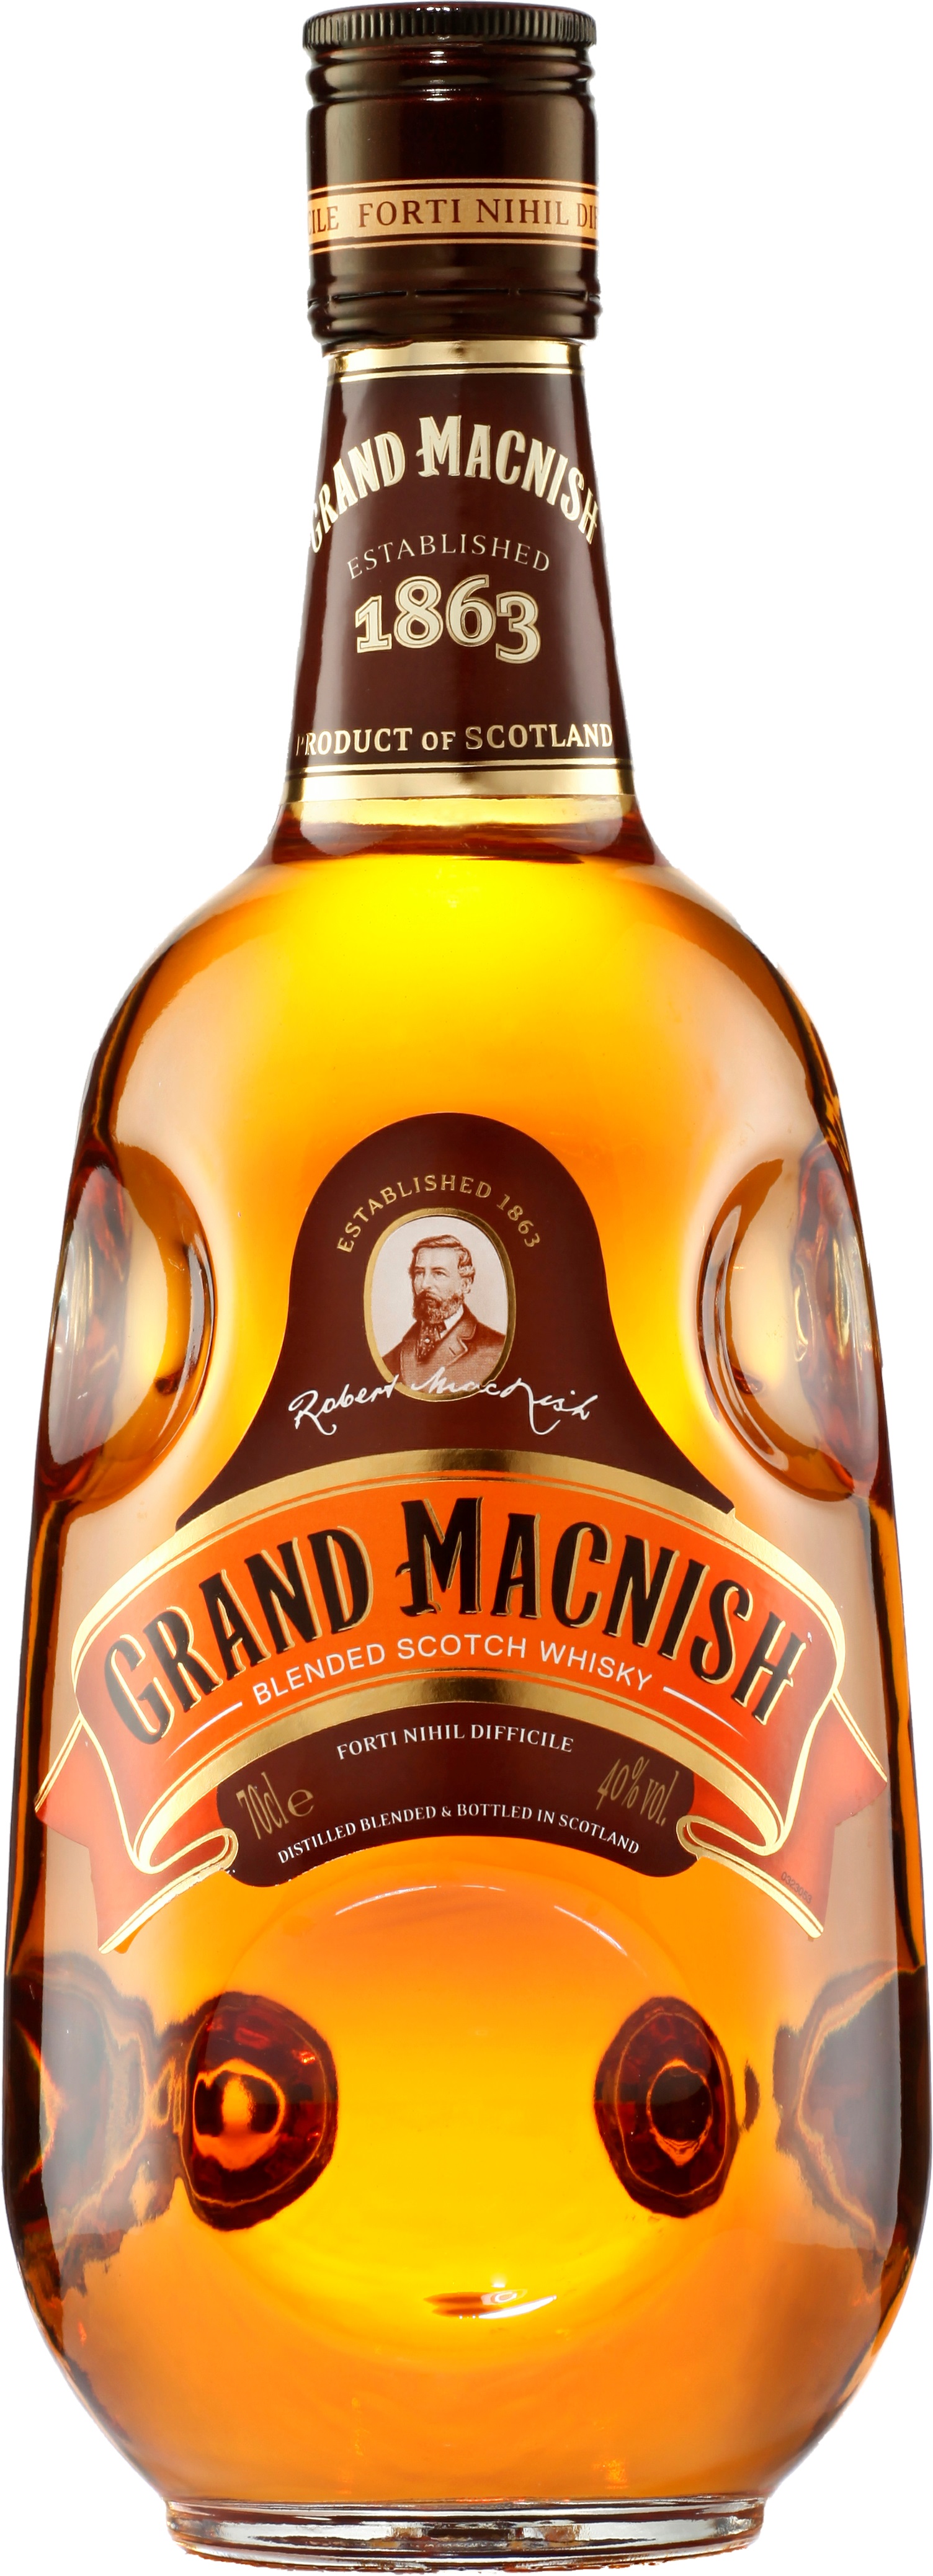 Grand Macnish Original Blended Scotch Whisky 0,7l